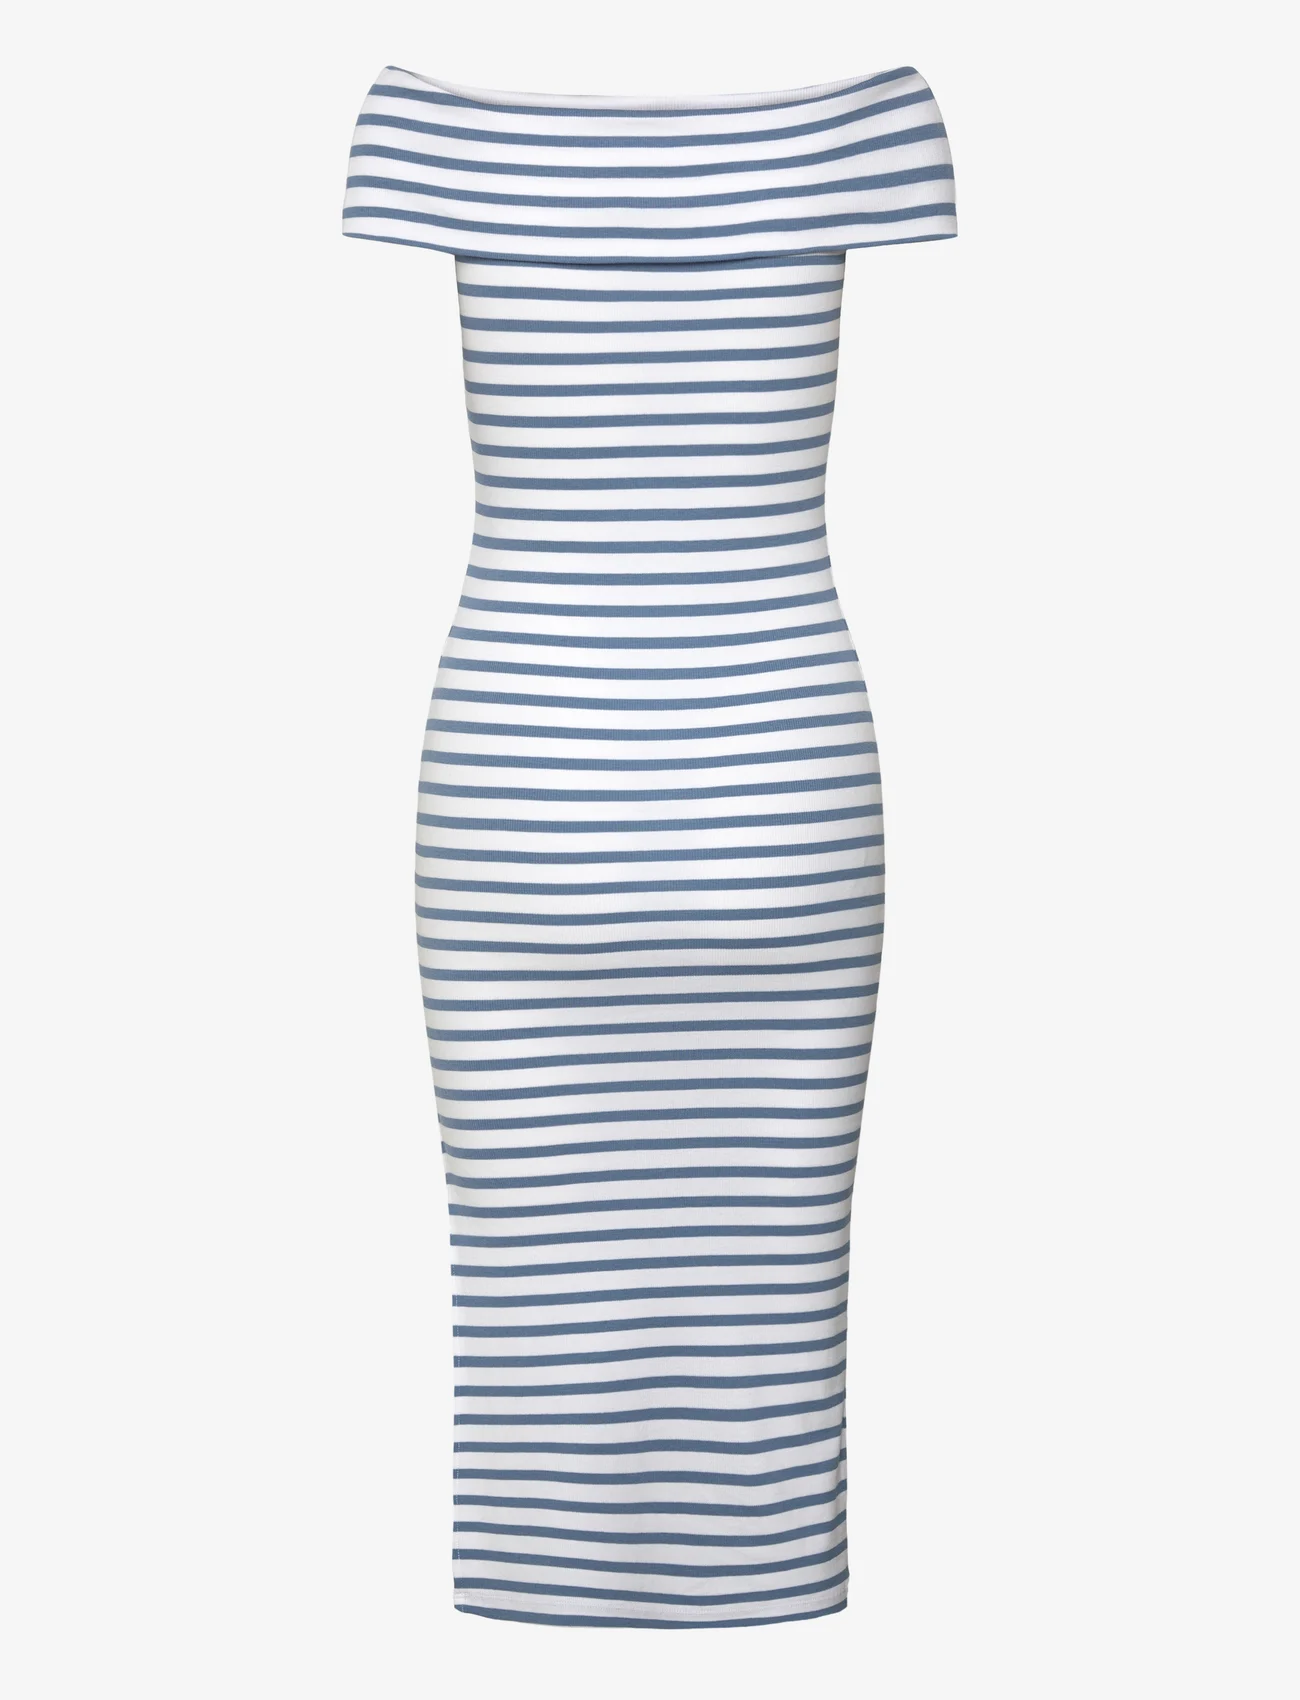 Lauren Ralph Lauren - Striped Off-the-Shoulder Midi Dress - sukienki letnie - white/pale azure - 1